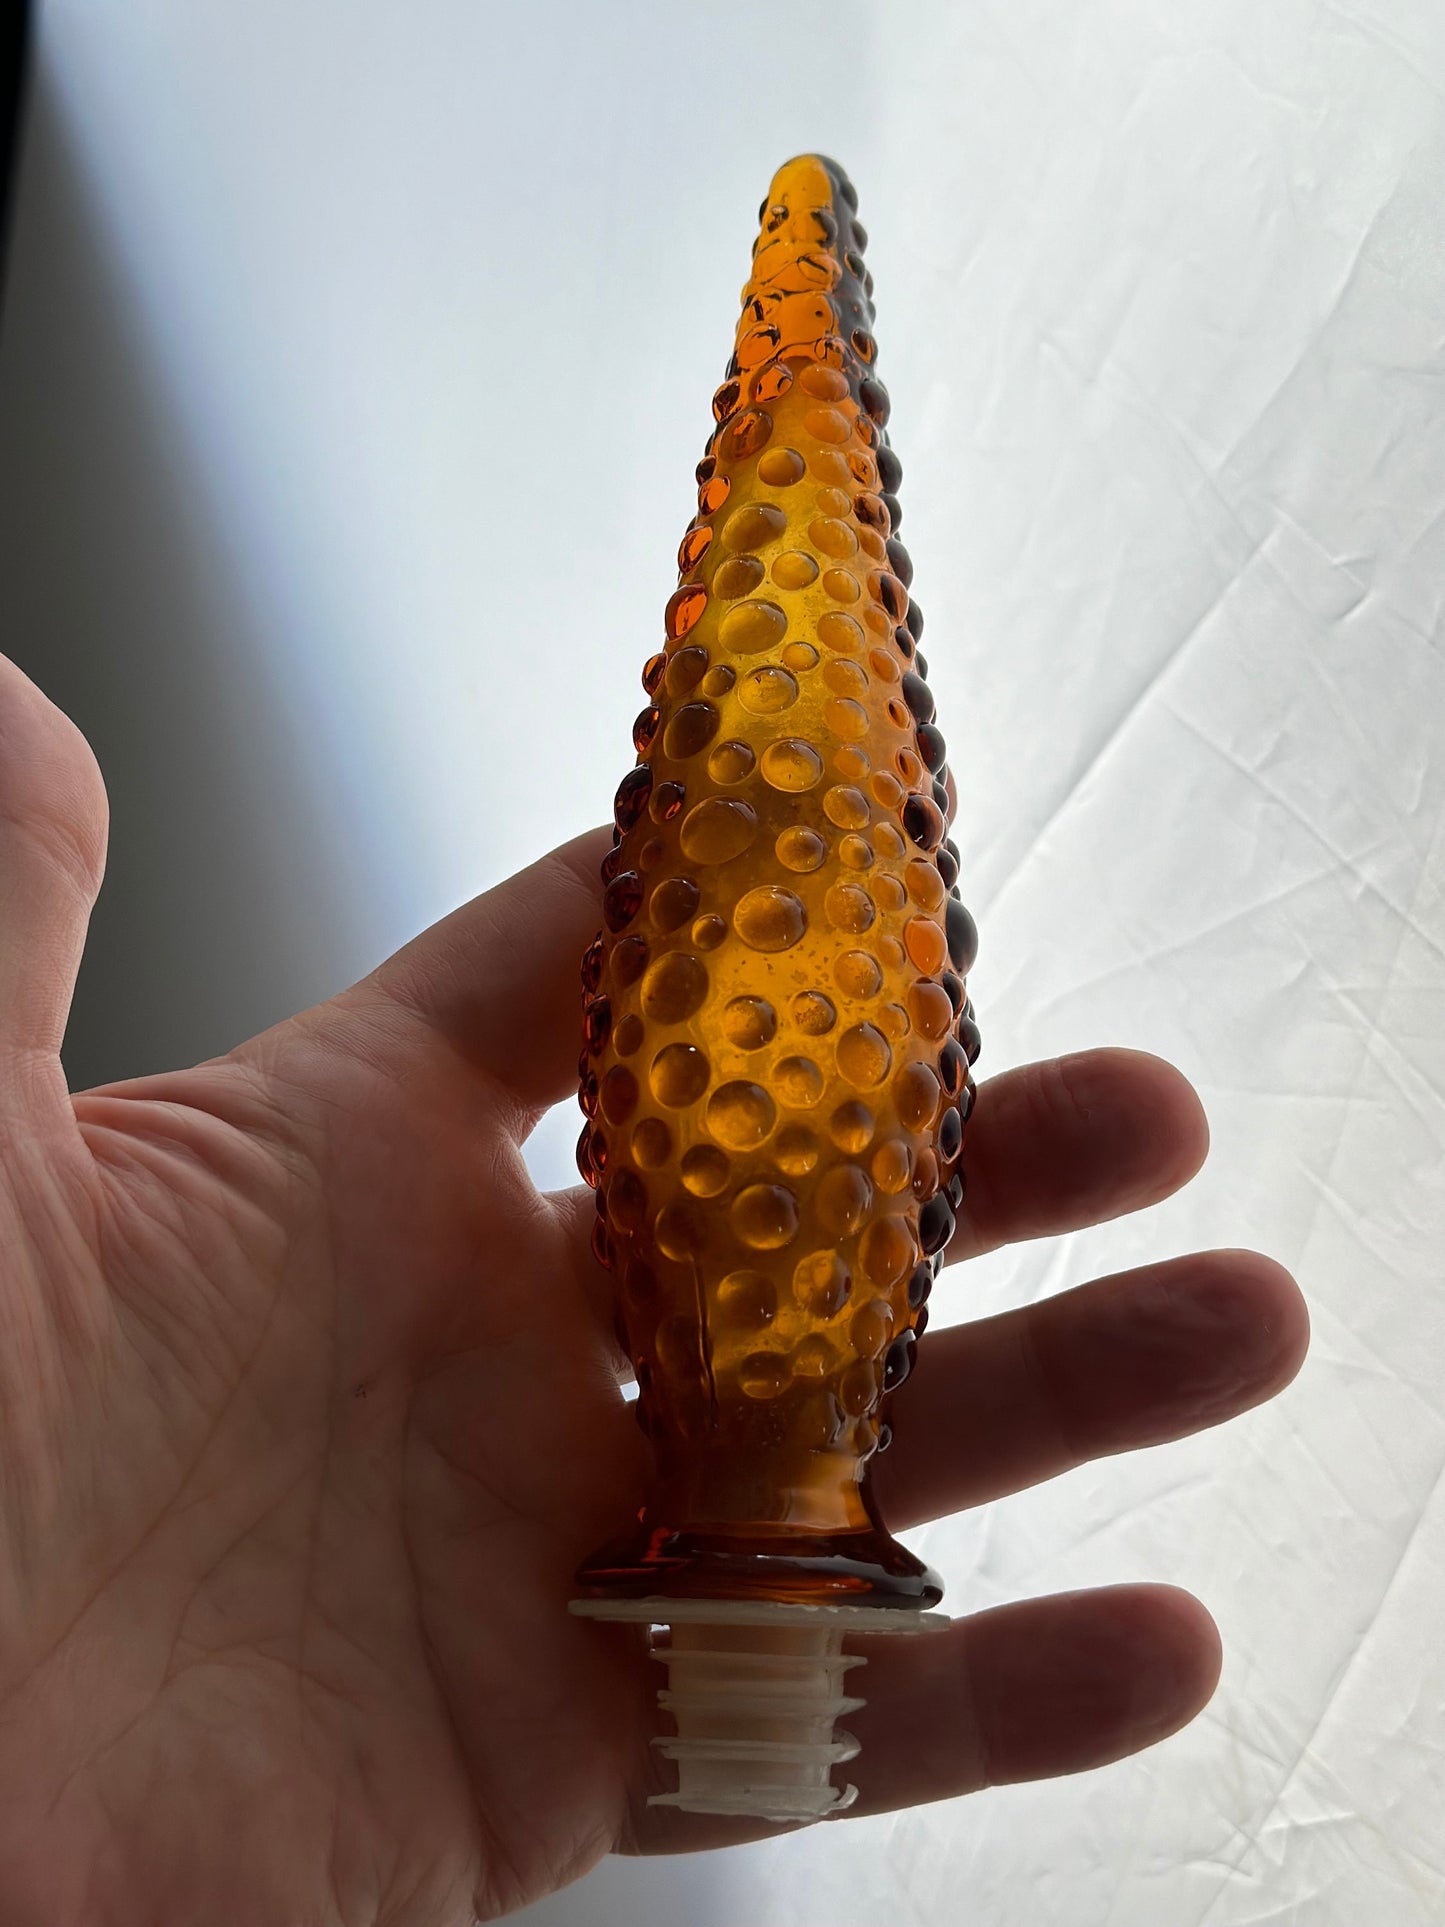 Italian Amber 'Genie' Decanter 1970s Empoli Glass